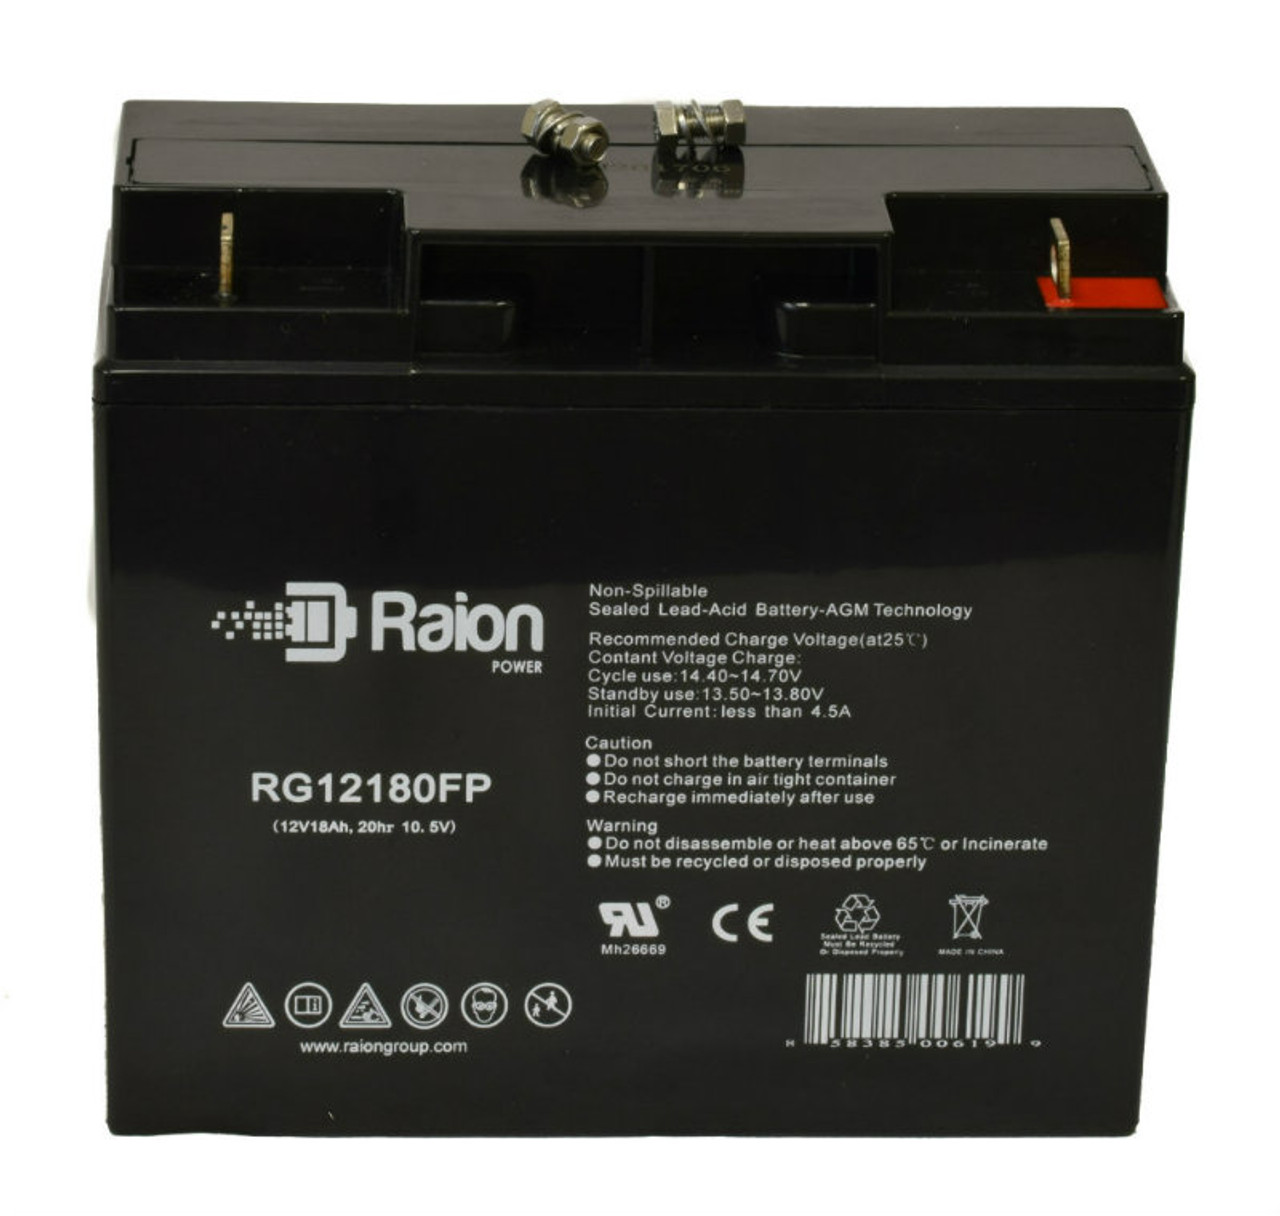 Raion Power RG12180FP 12V 18Ah Lead Acid Battery for Volt Canada Jet